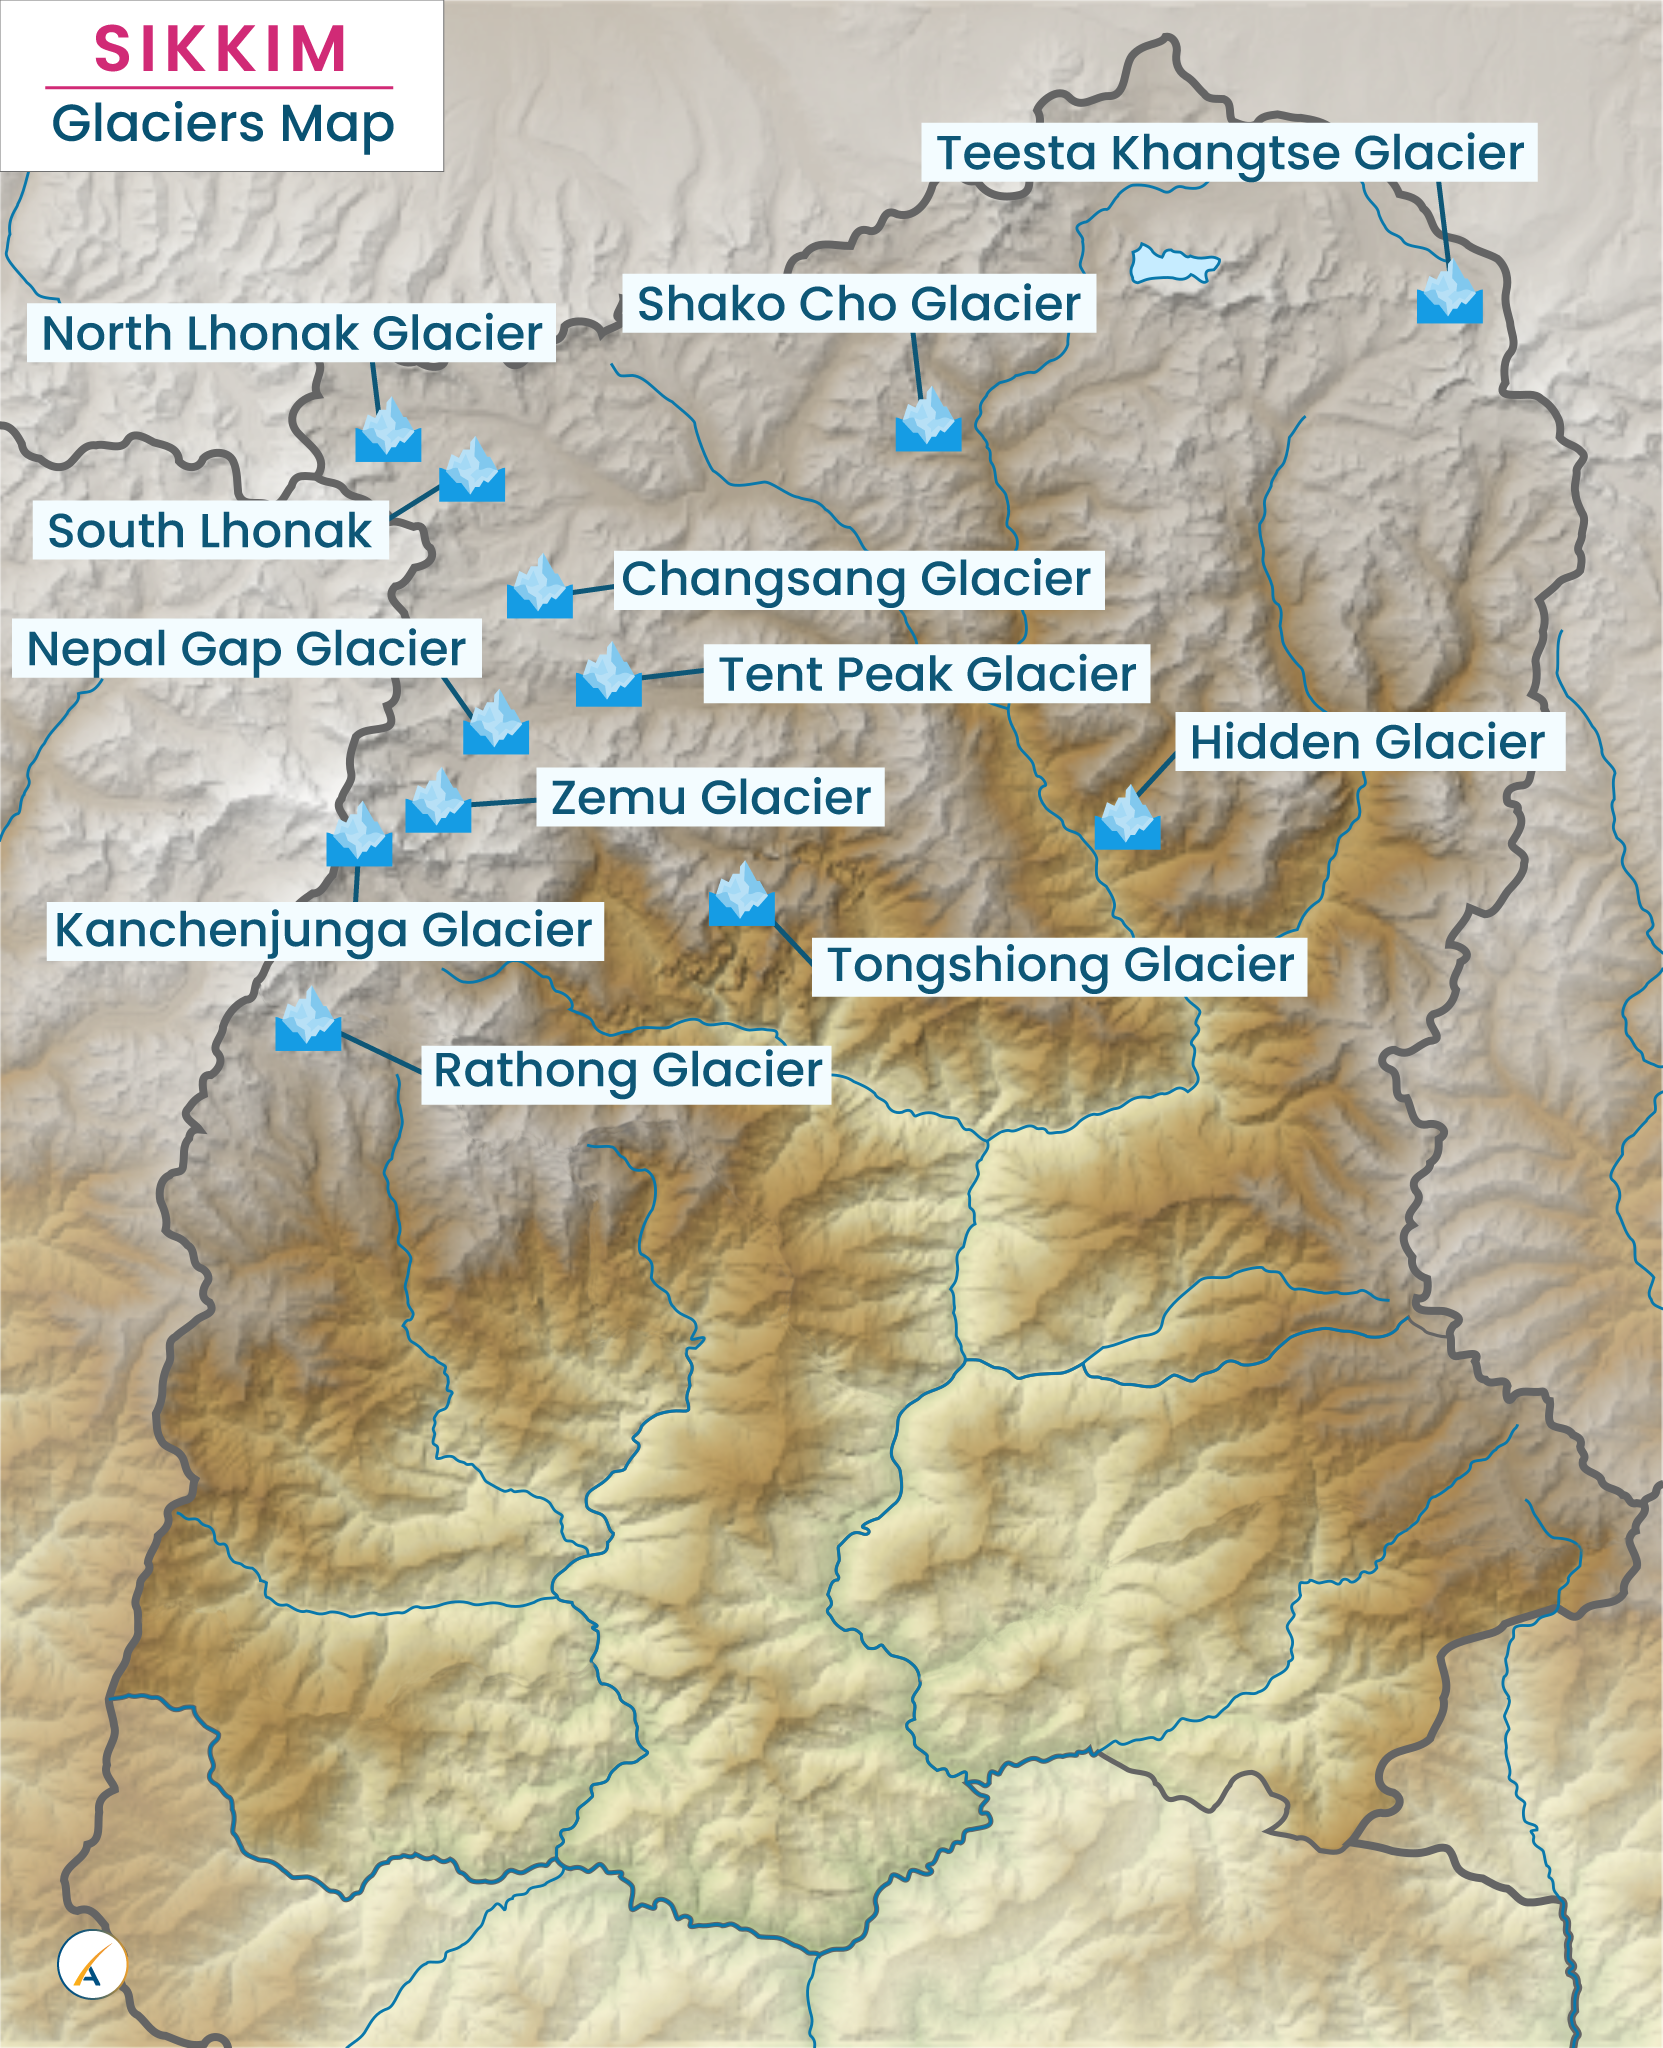 Sikkim Glacier Map